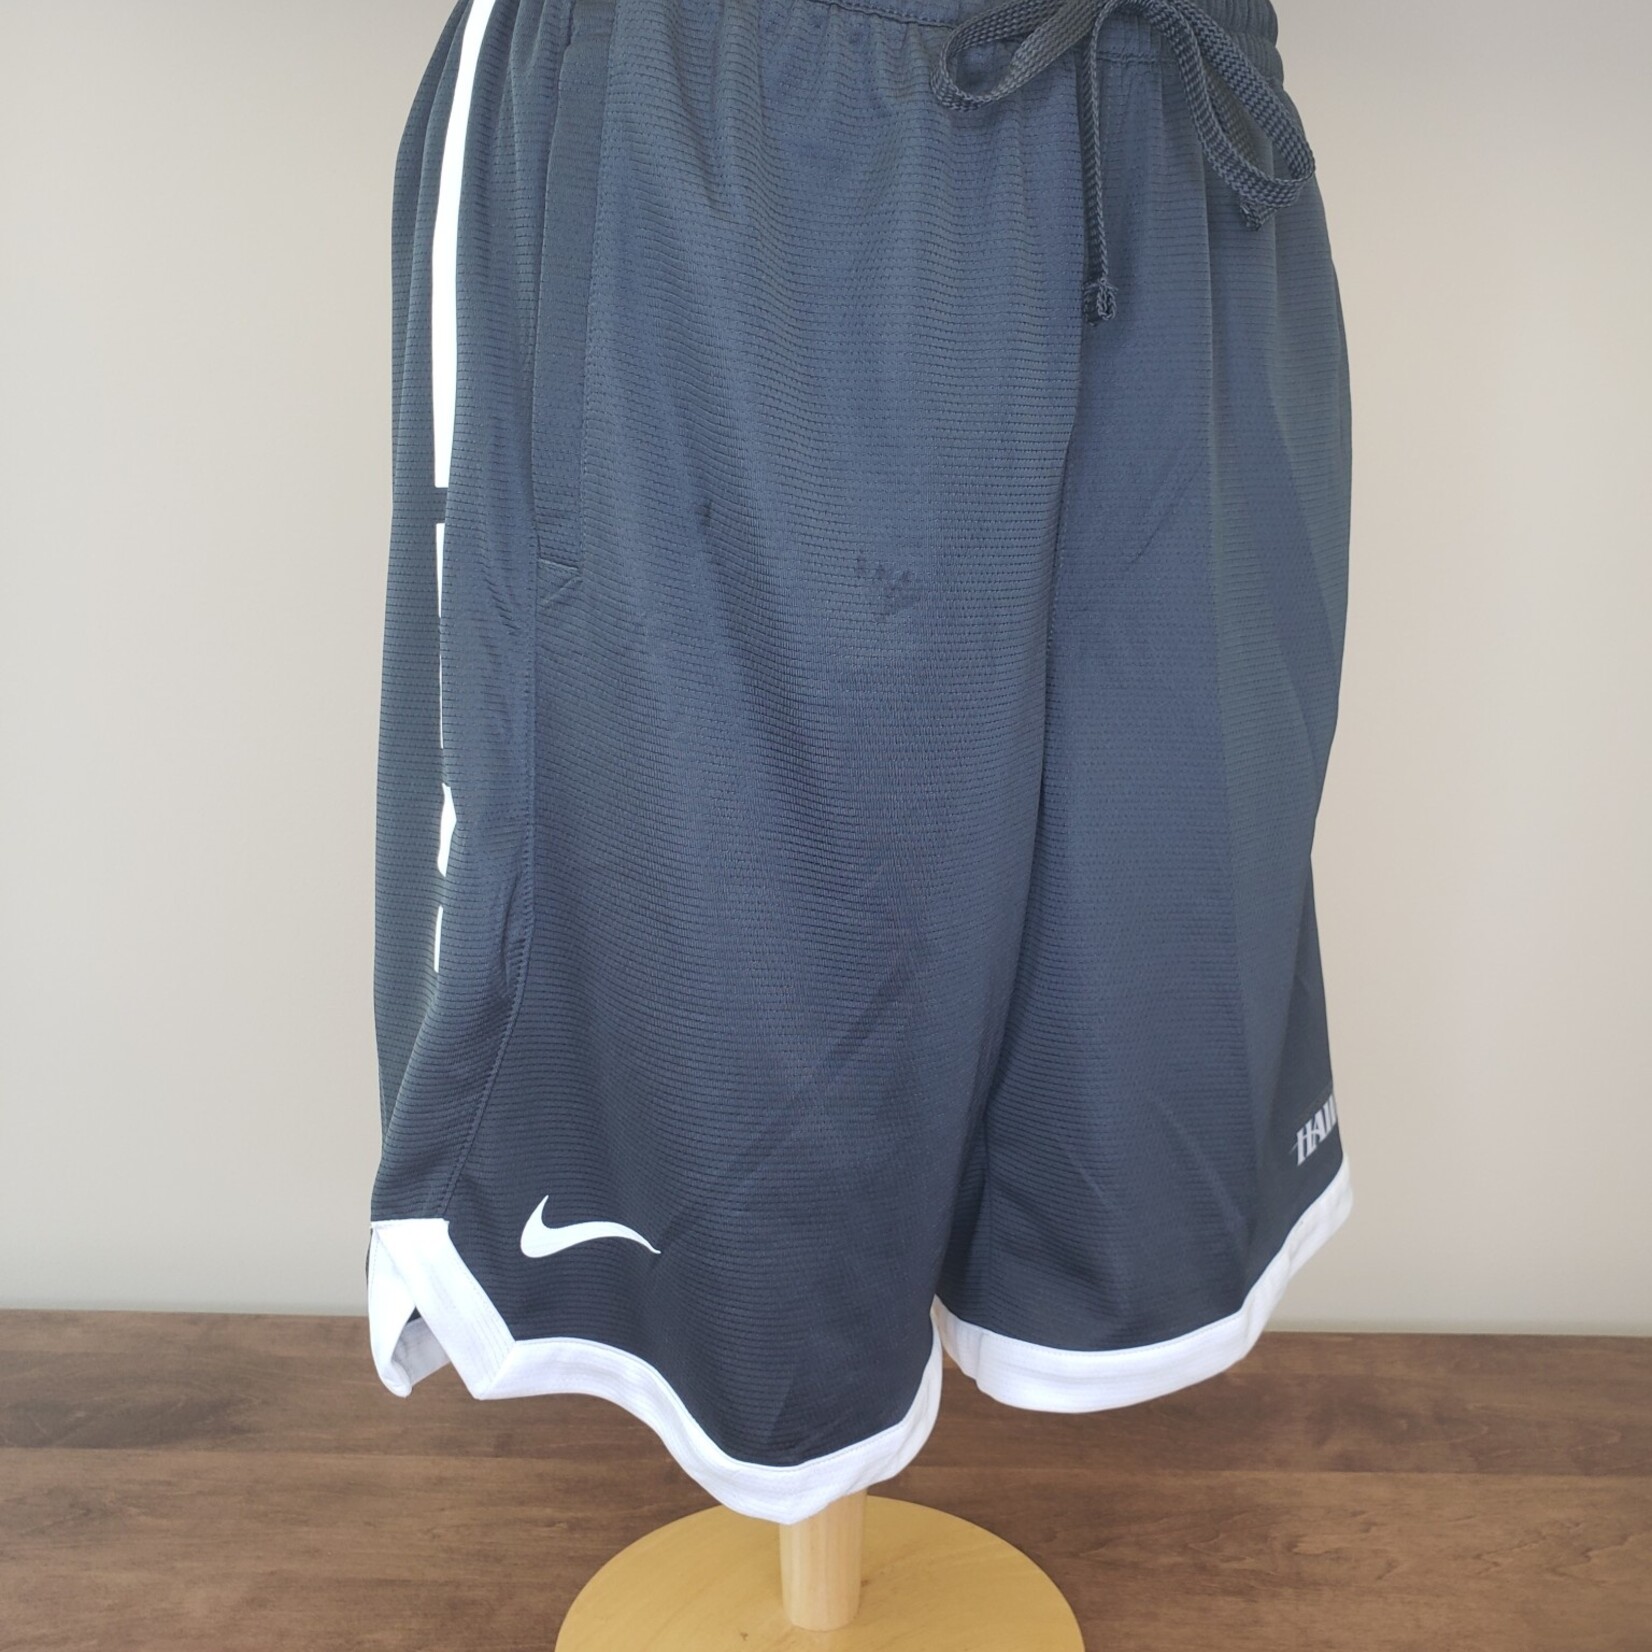 Hawks Nike Dri-Fit Shorts with Stripe Detail